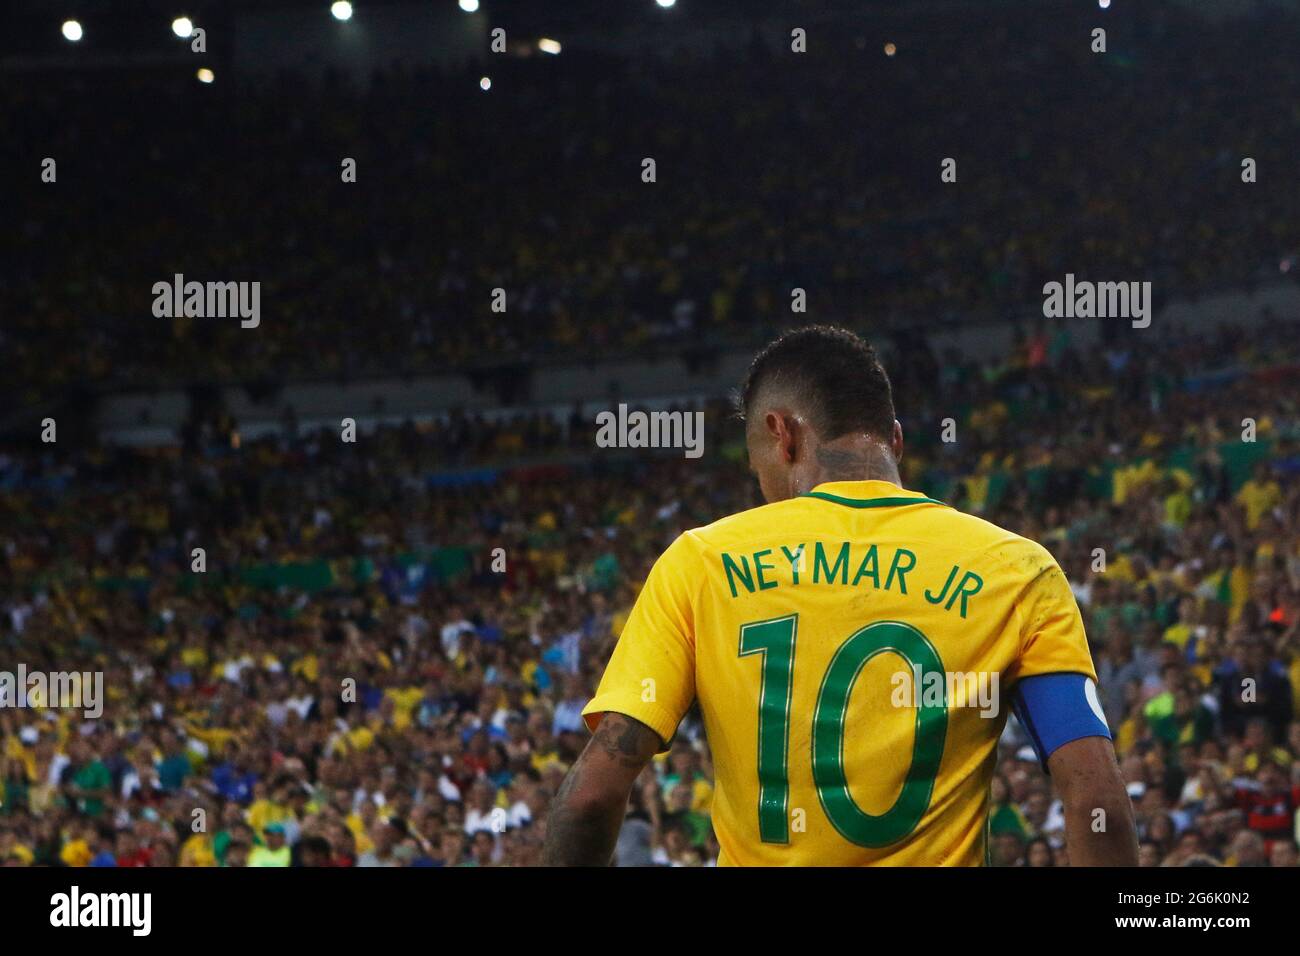 Neymar Jr Brazilian Soccer Player Superstar At Maracana Stadium National Team Forward At Final Gold Medal Match At Rio 16 Olympic Games Stock Photo Alamy